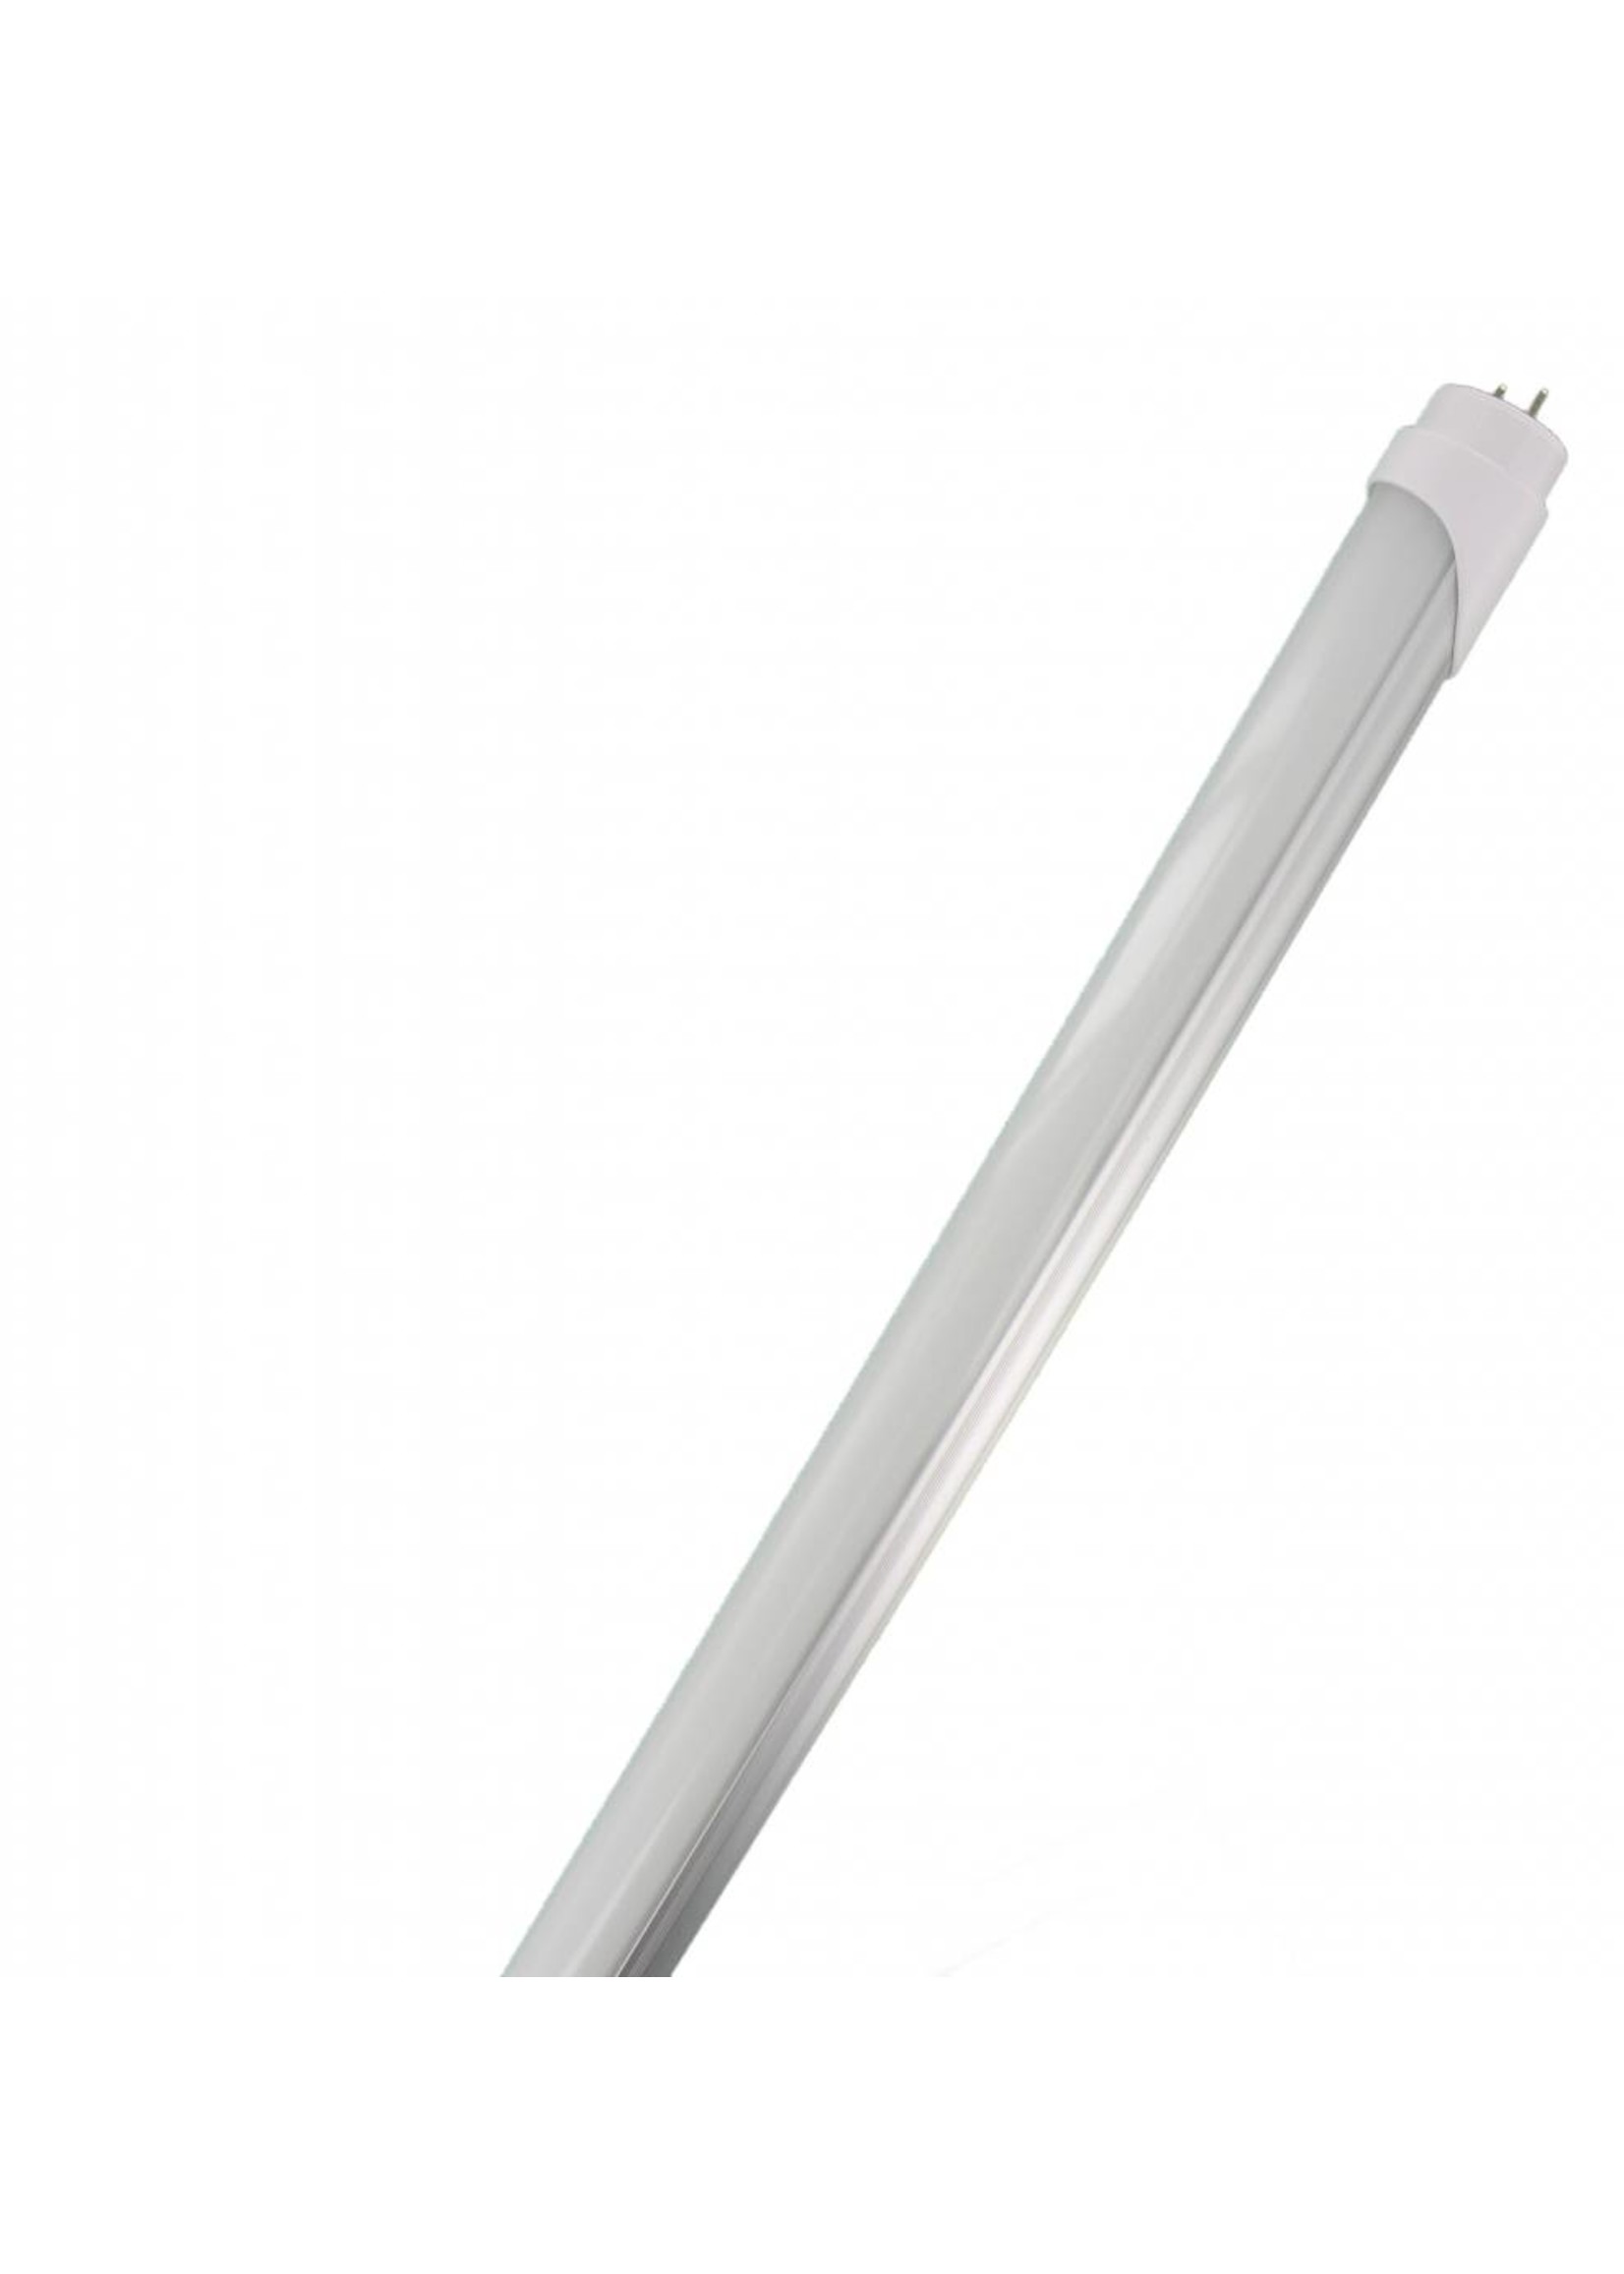 Bright white LED fluorescent tube T8 120cm - Copy